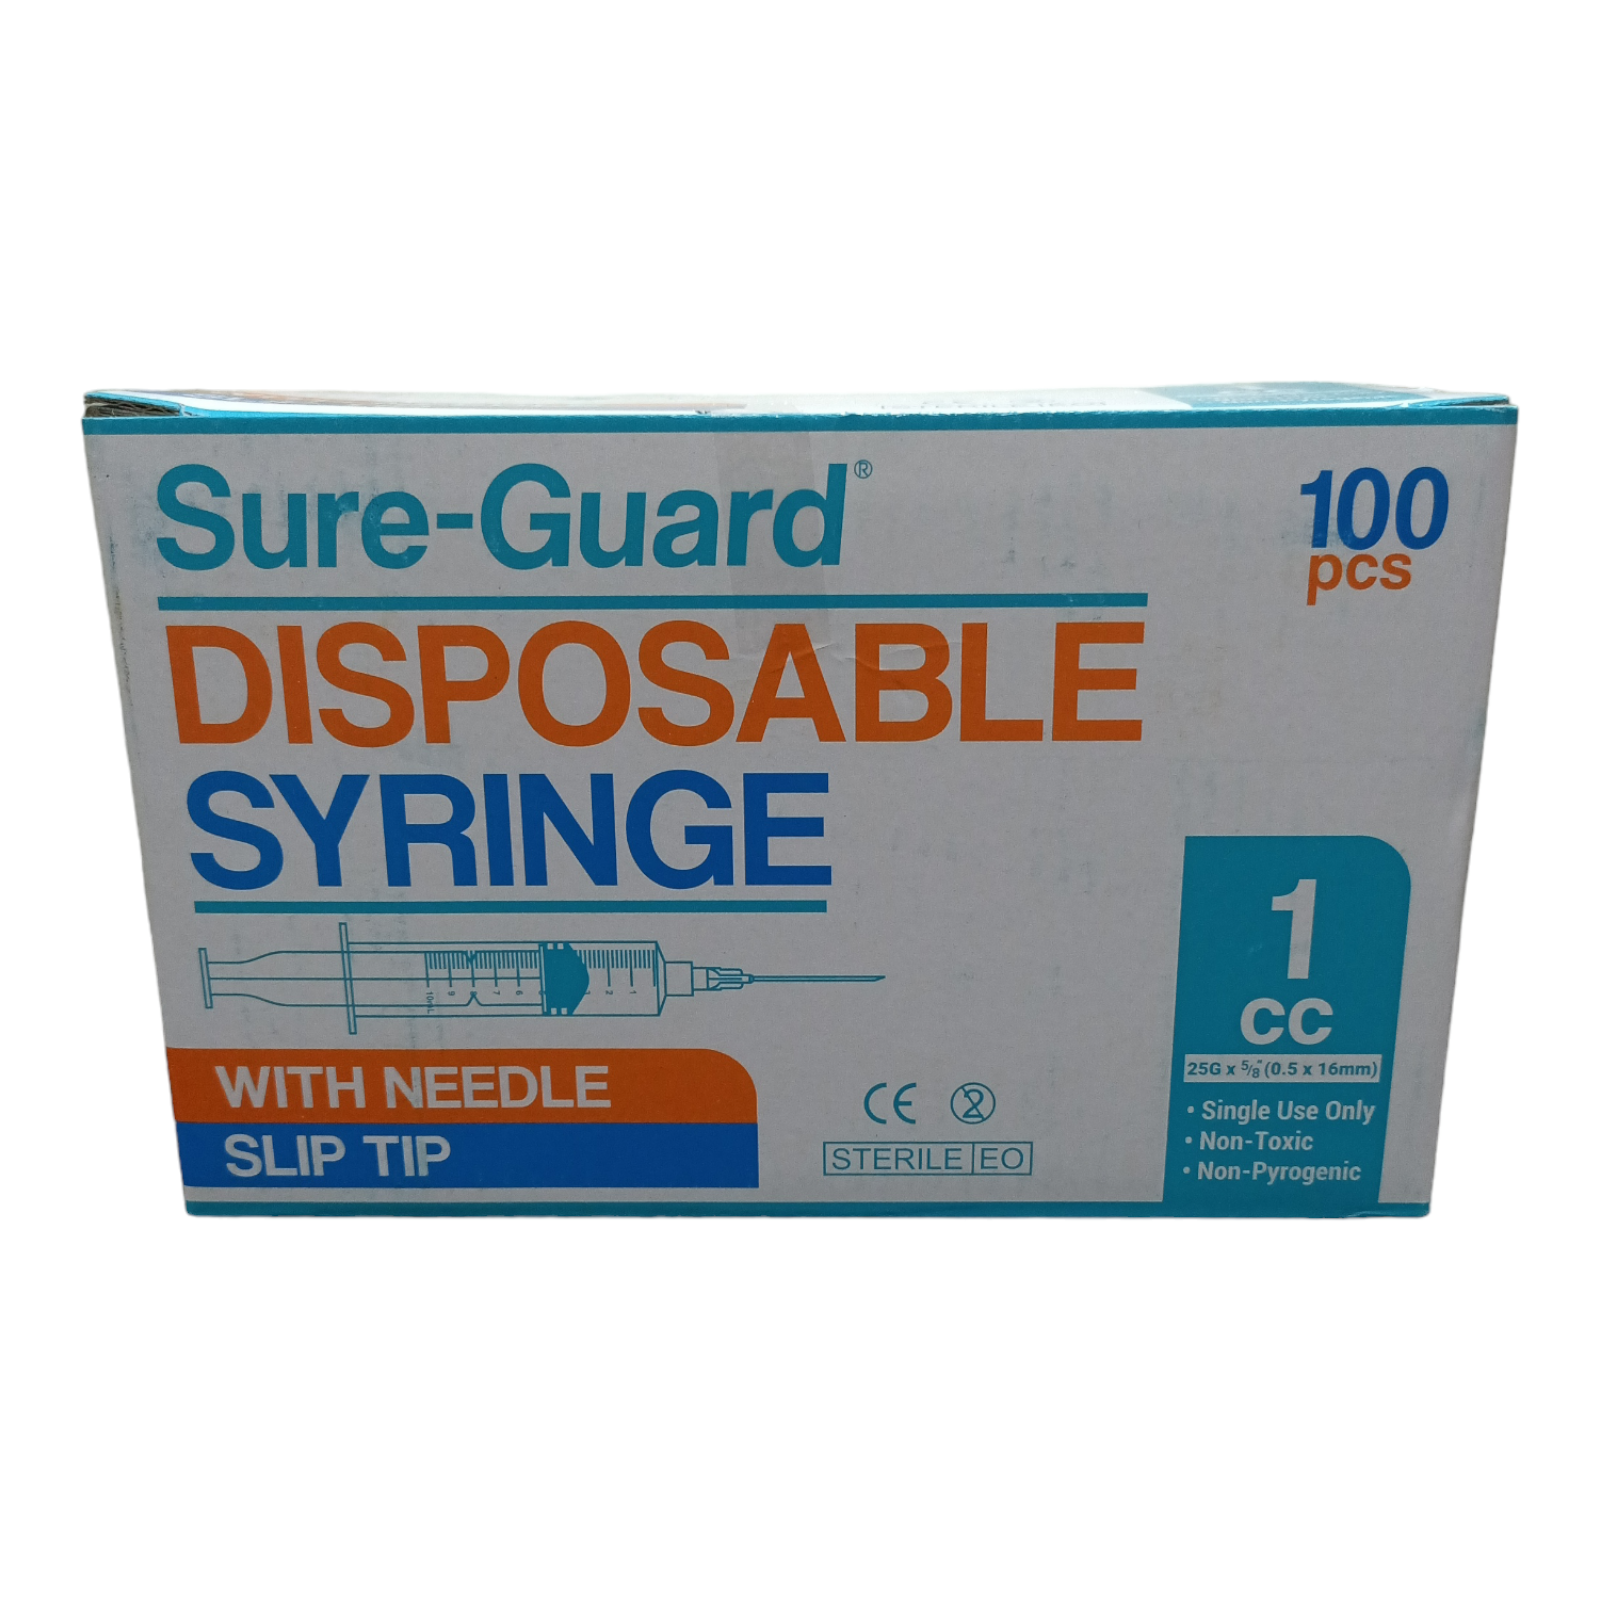 1cc Disposable Syringe 25G x 5/8"